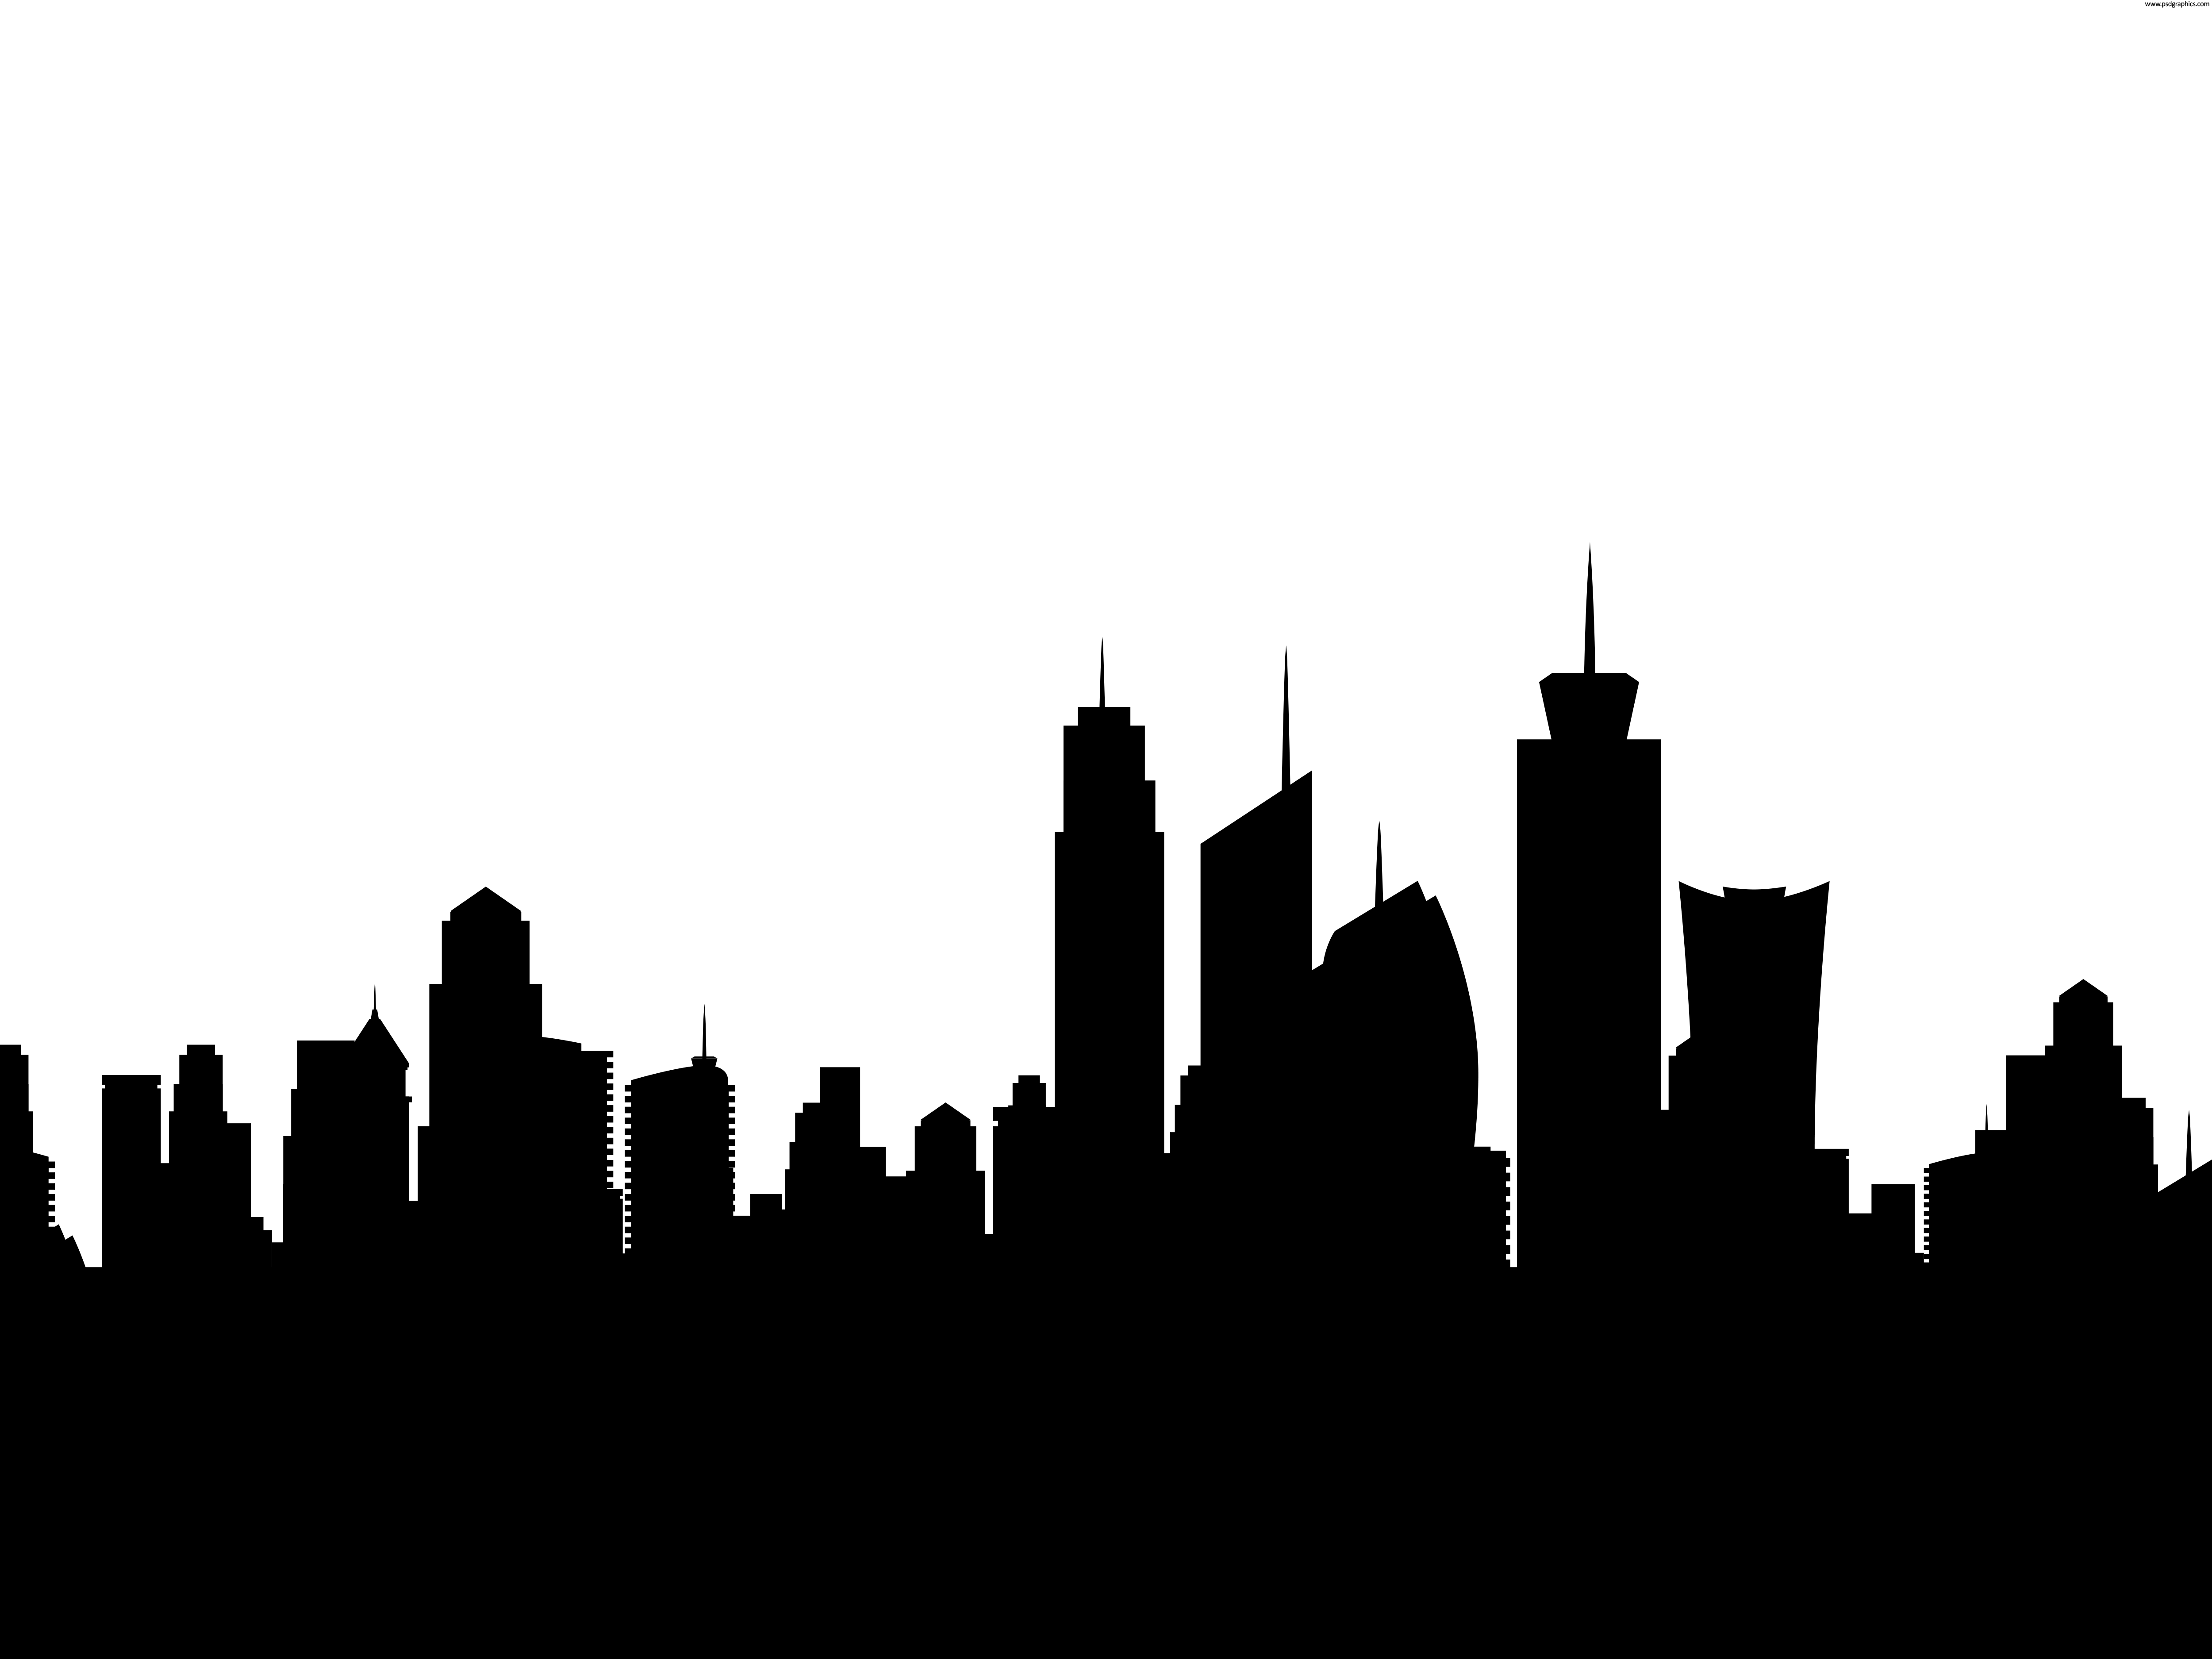 Philadelphia Skyline Drawing - ClipArt Best